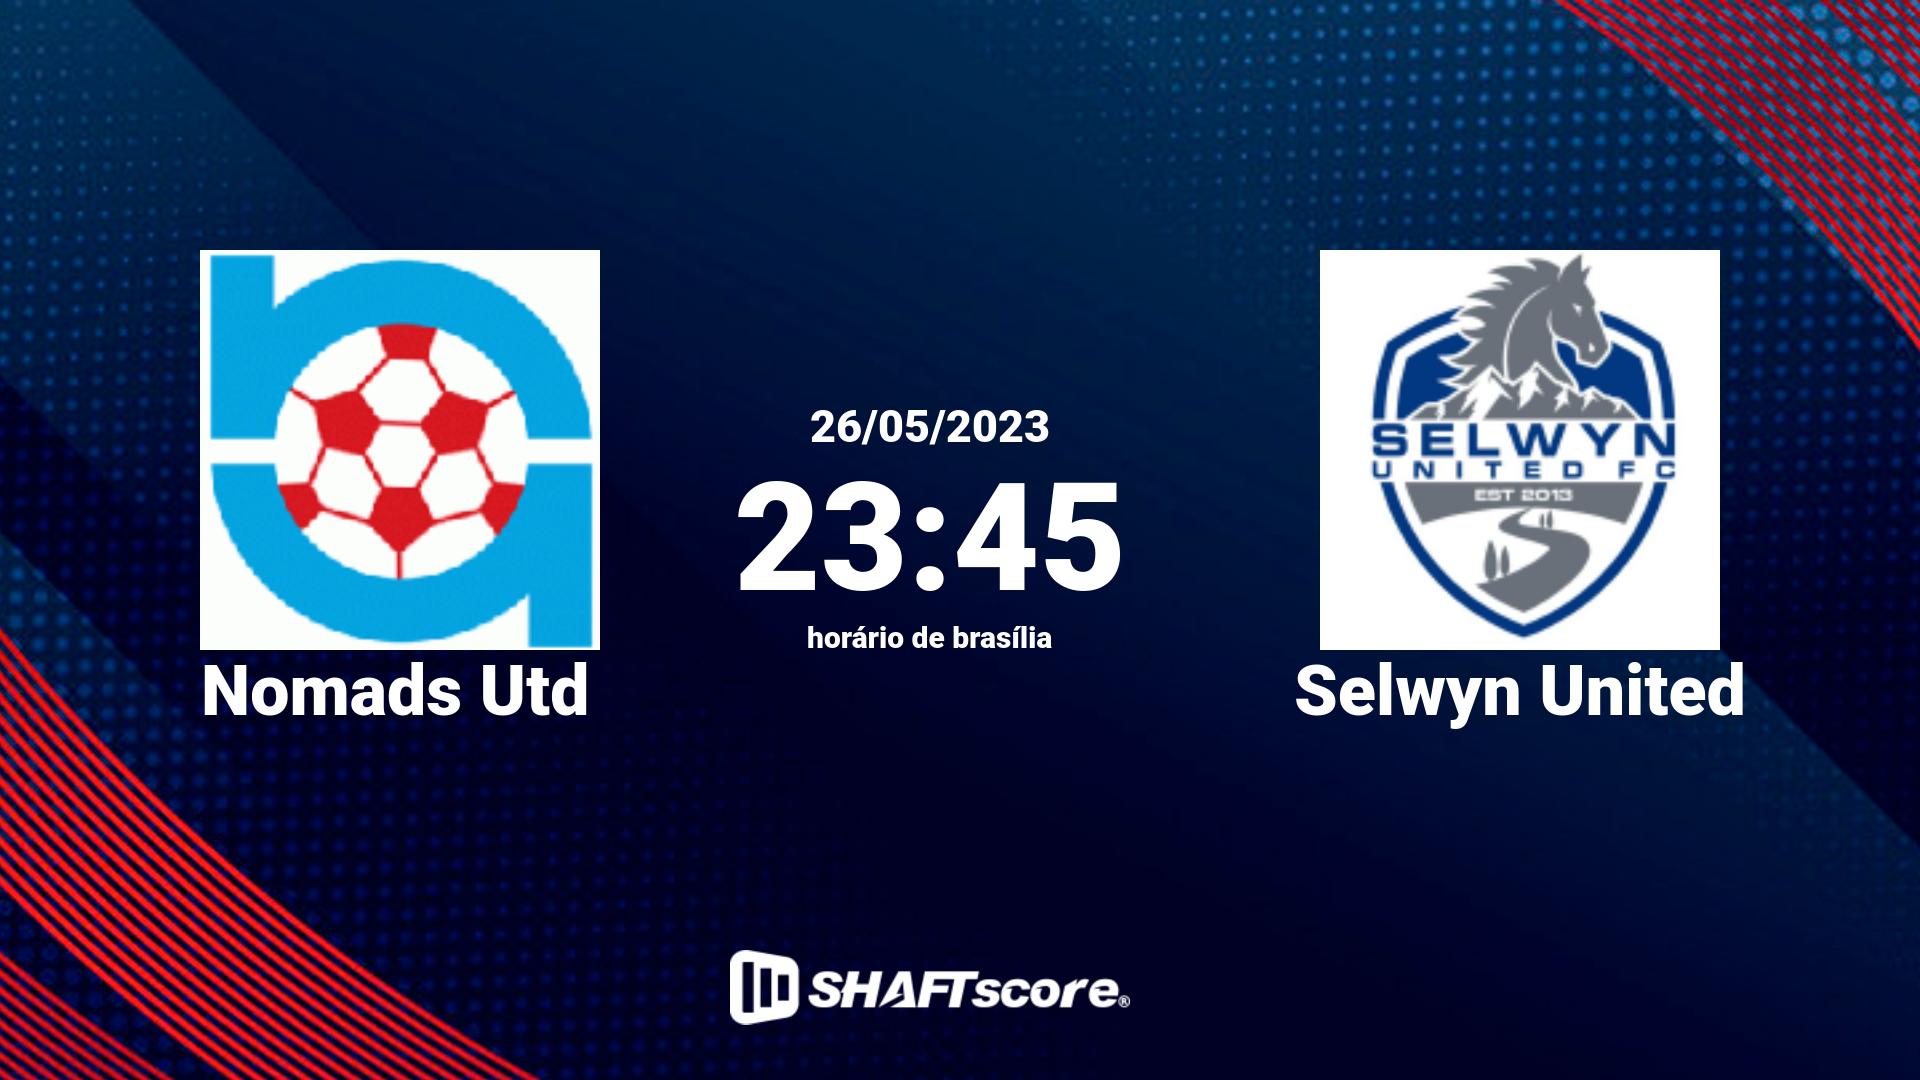 Estatísticas do jogo Nomads Utd vs Selwyn United 26.05 23:45